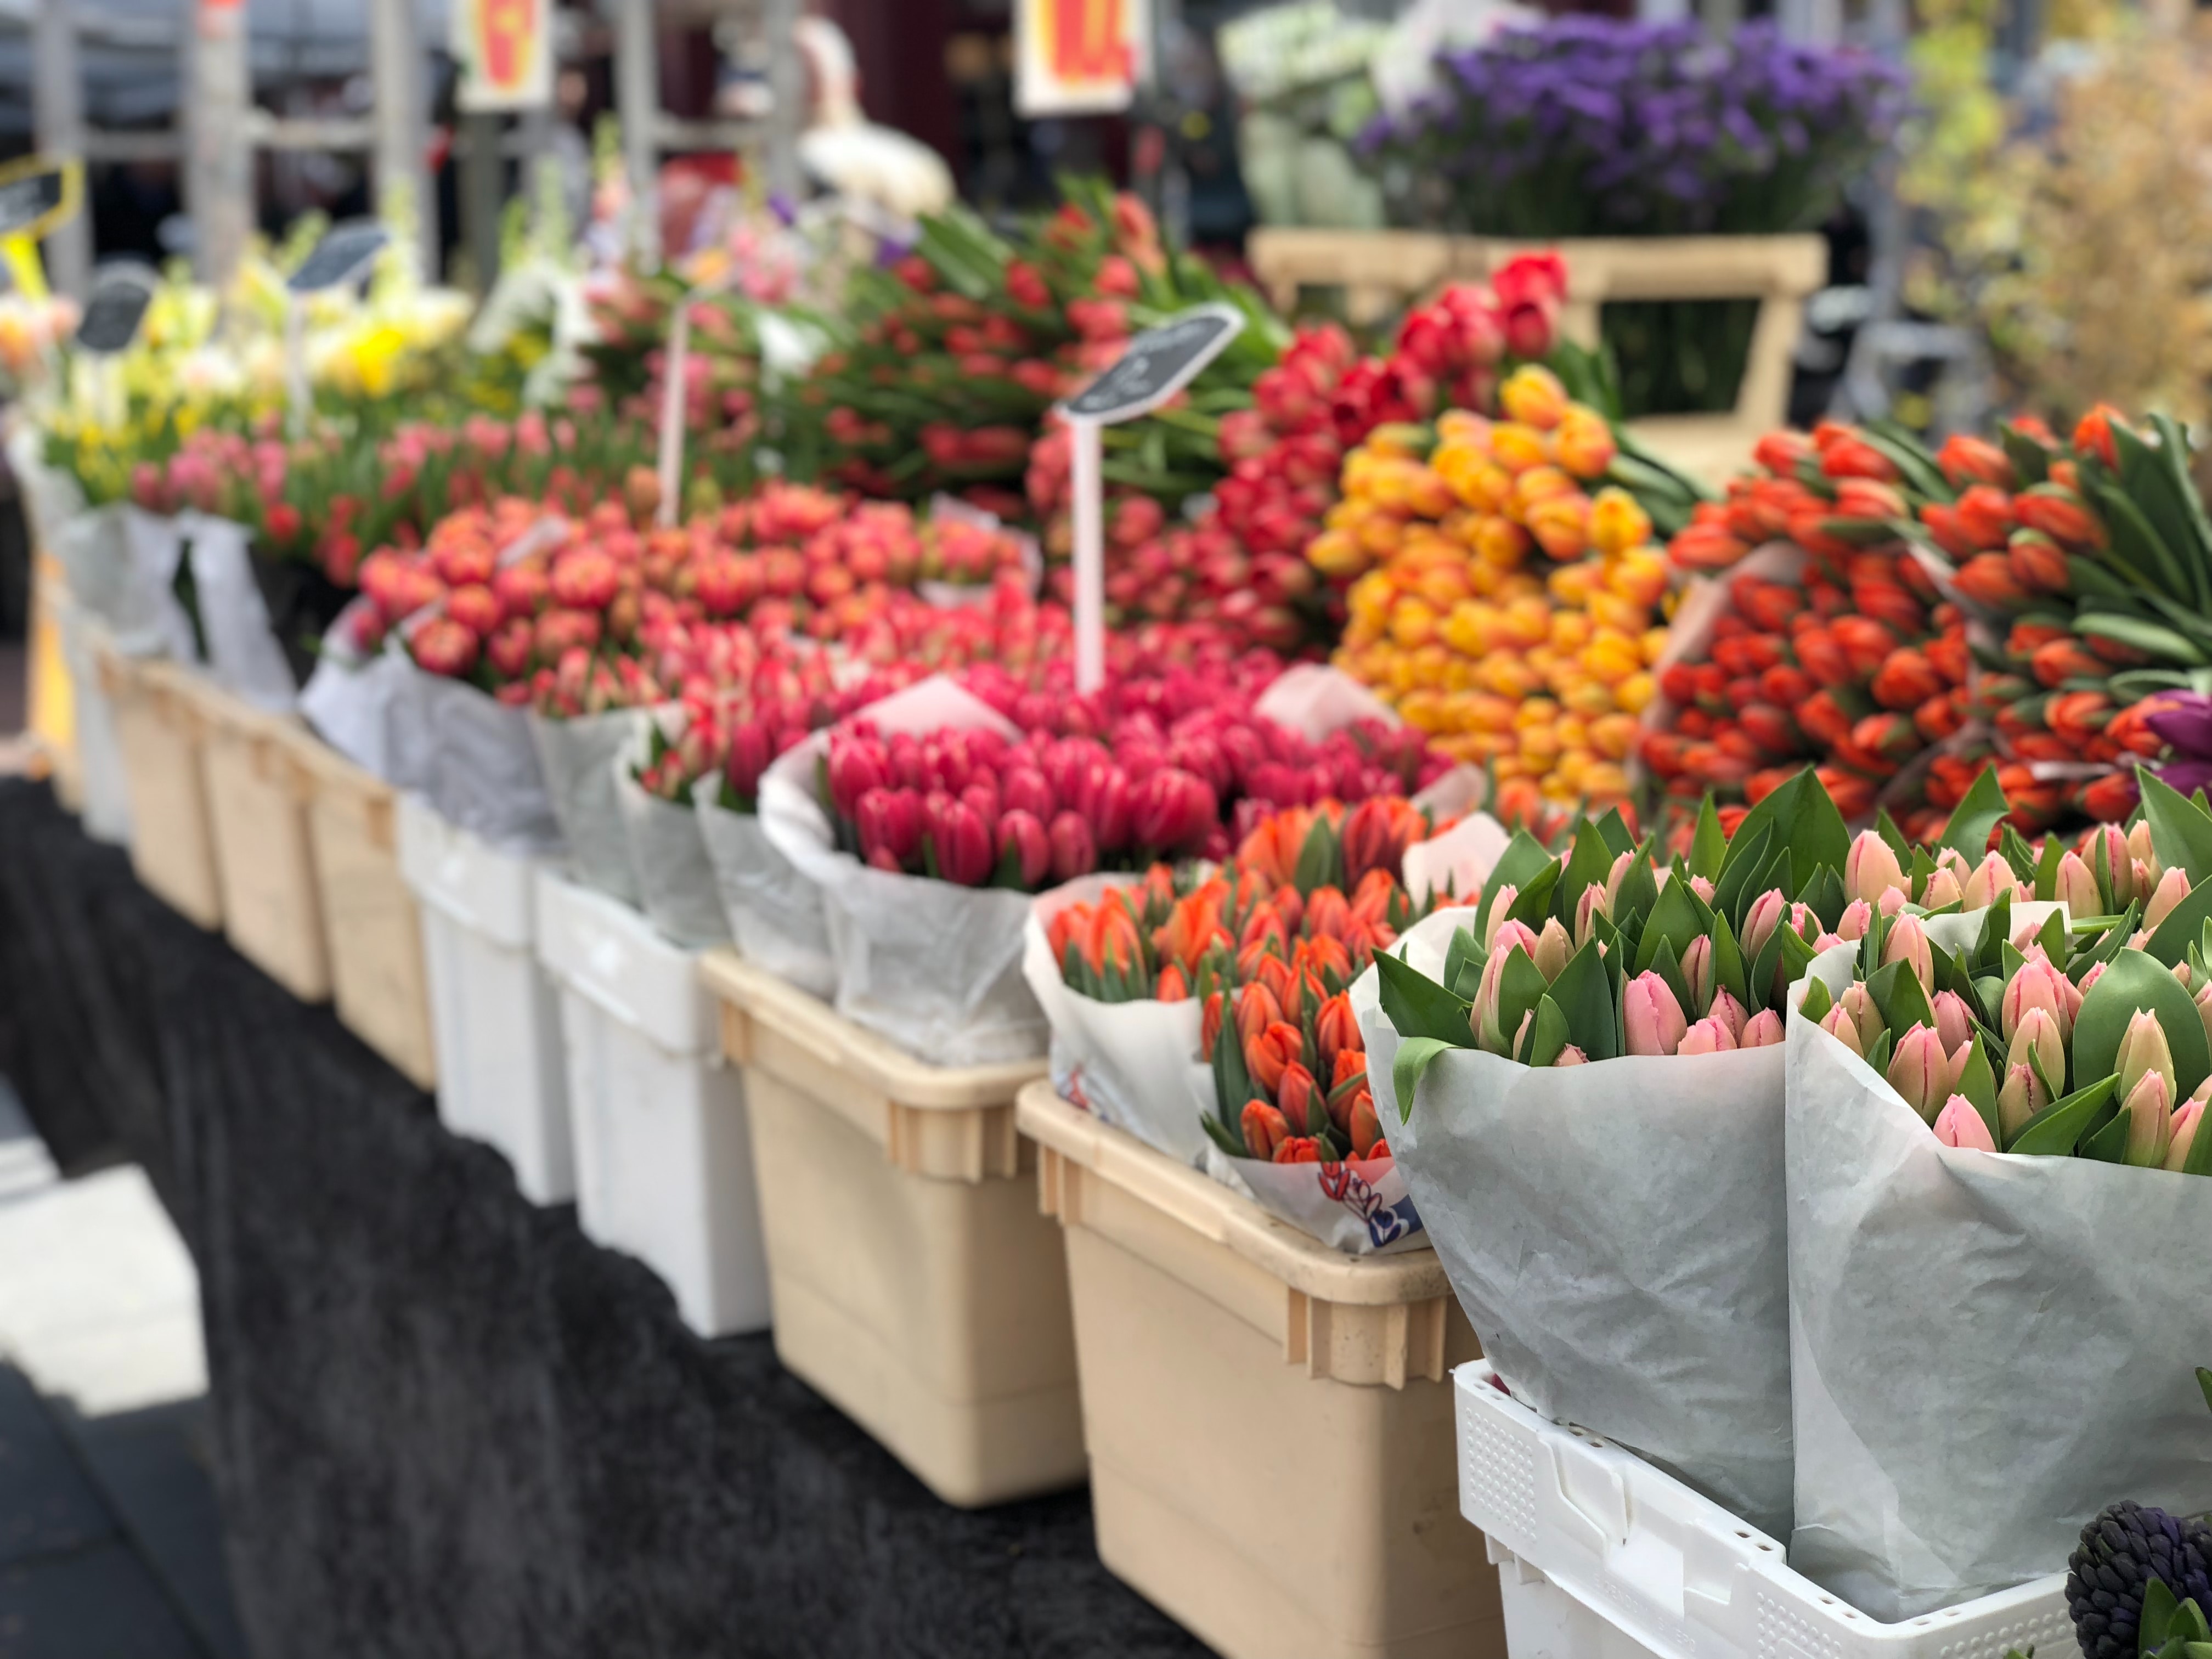 The flowers already. Цветочный рынок. Рынок цветов. Голландские рынки цветов. Рынок цветов в Амстердаме.